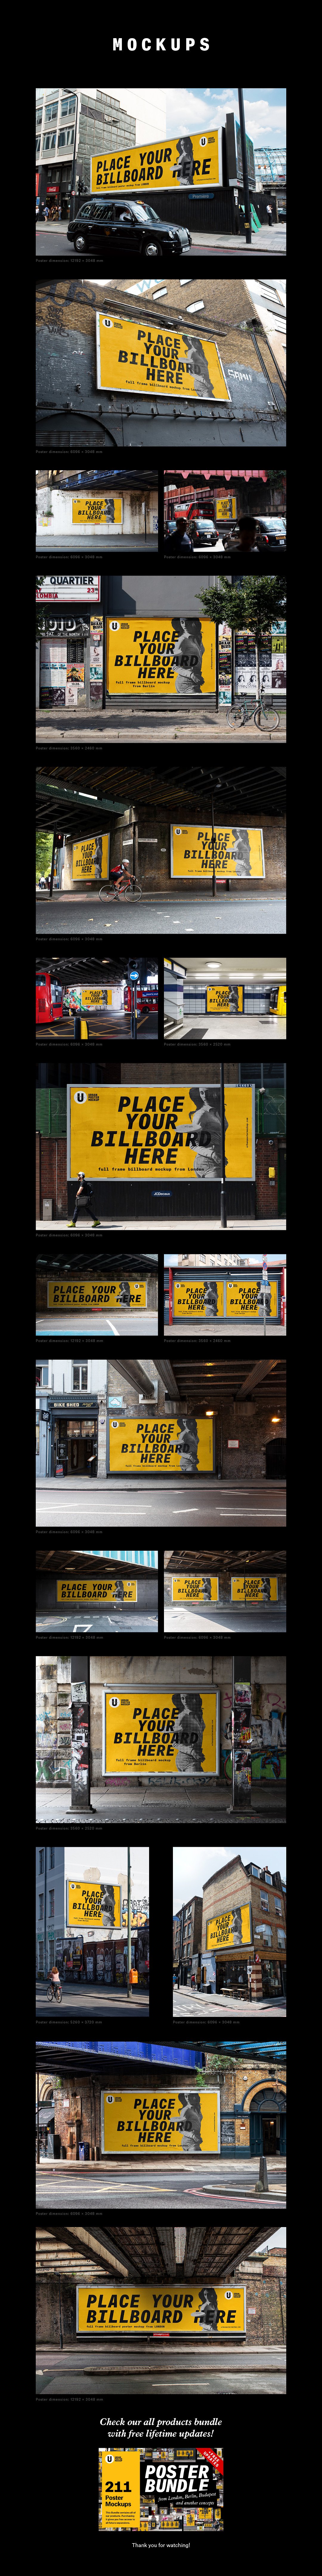 户外广告牌展示样机下载 Billboard Mockup [psd] 2.45 GB插图(1)